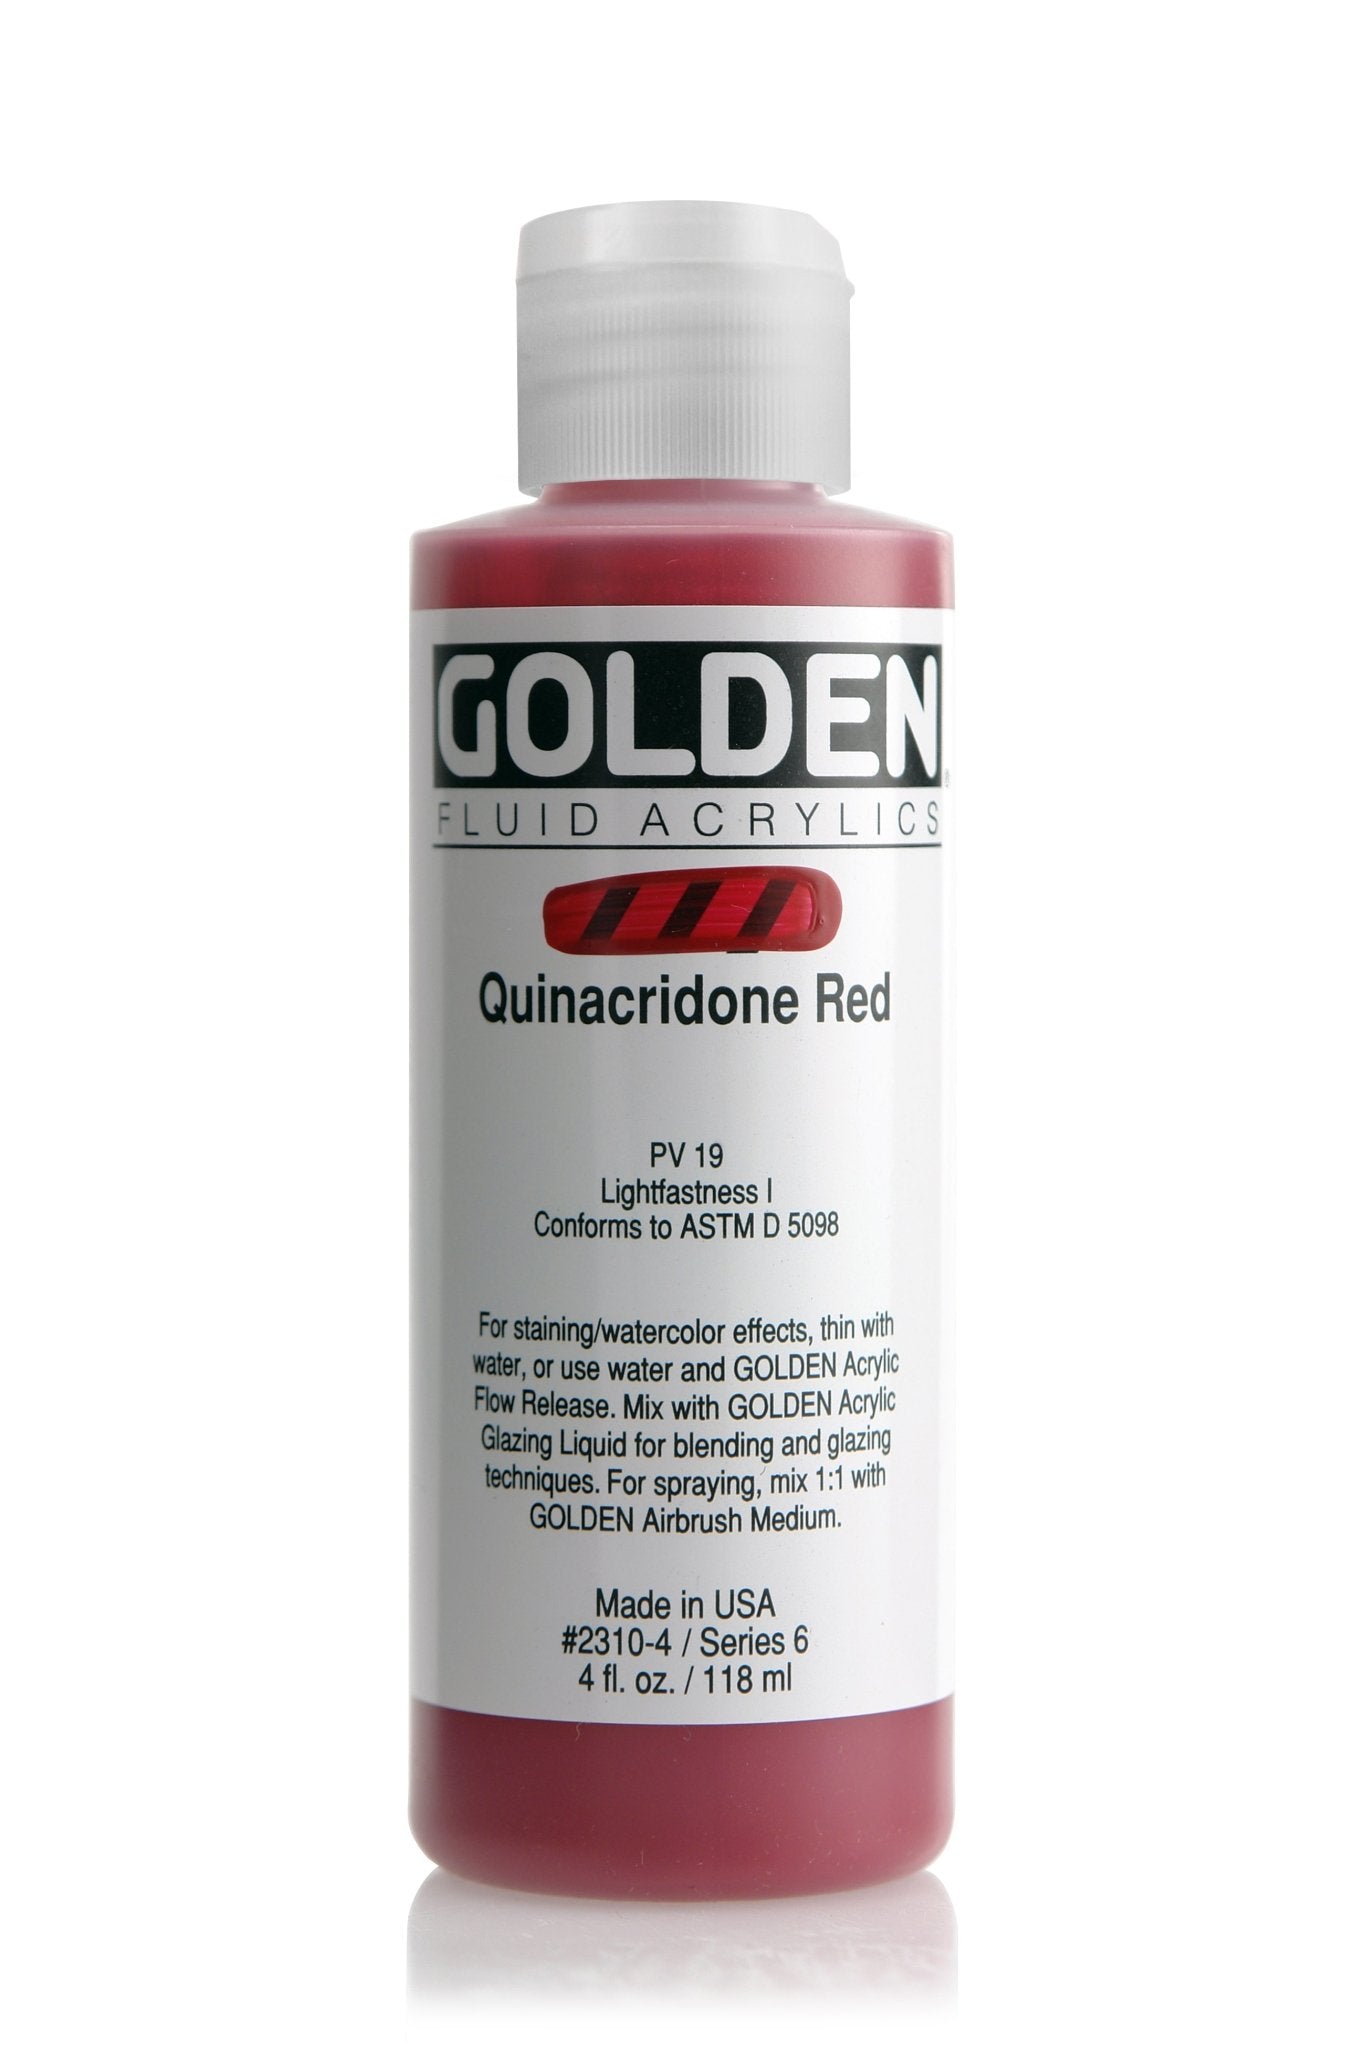 Golden Fluid Acrylic 118ml Quinacridone Red - theartshop.com.au